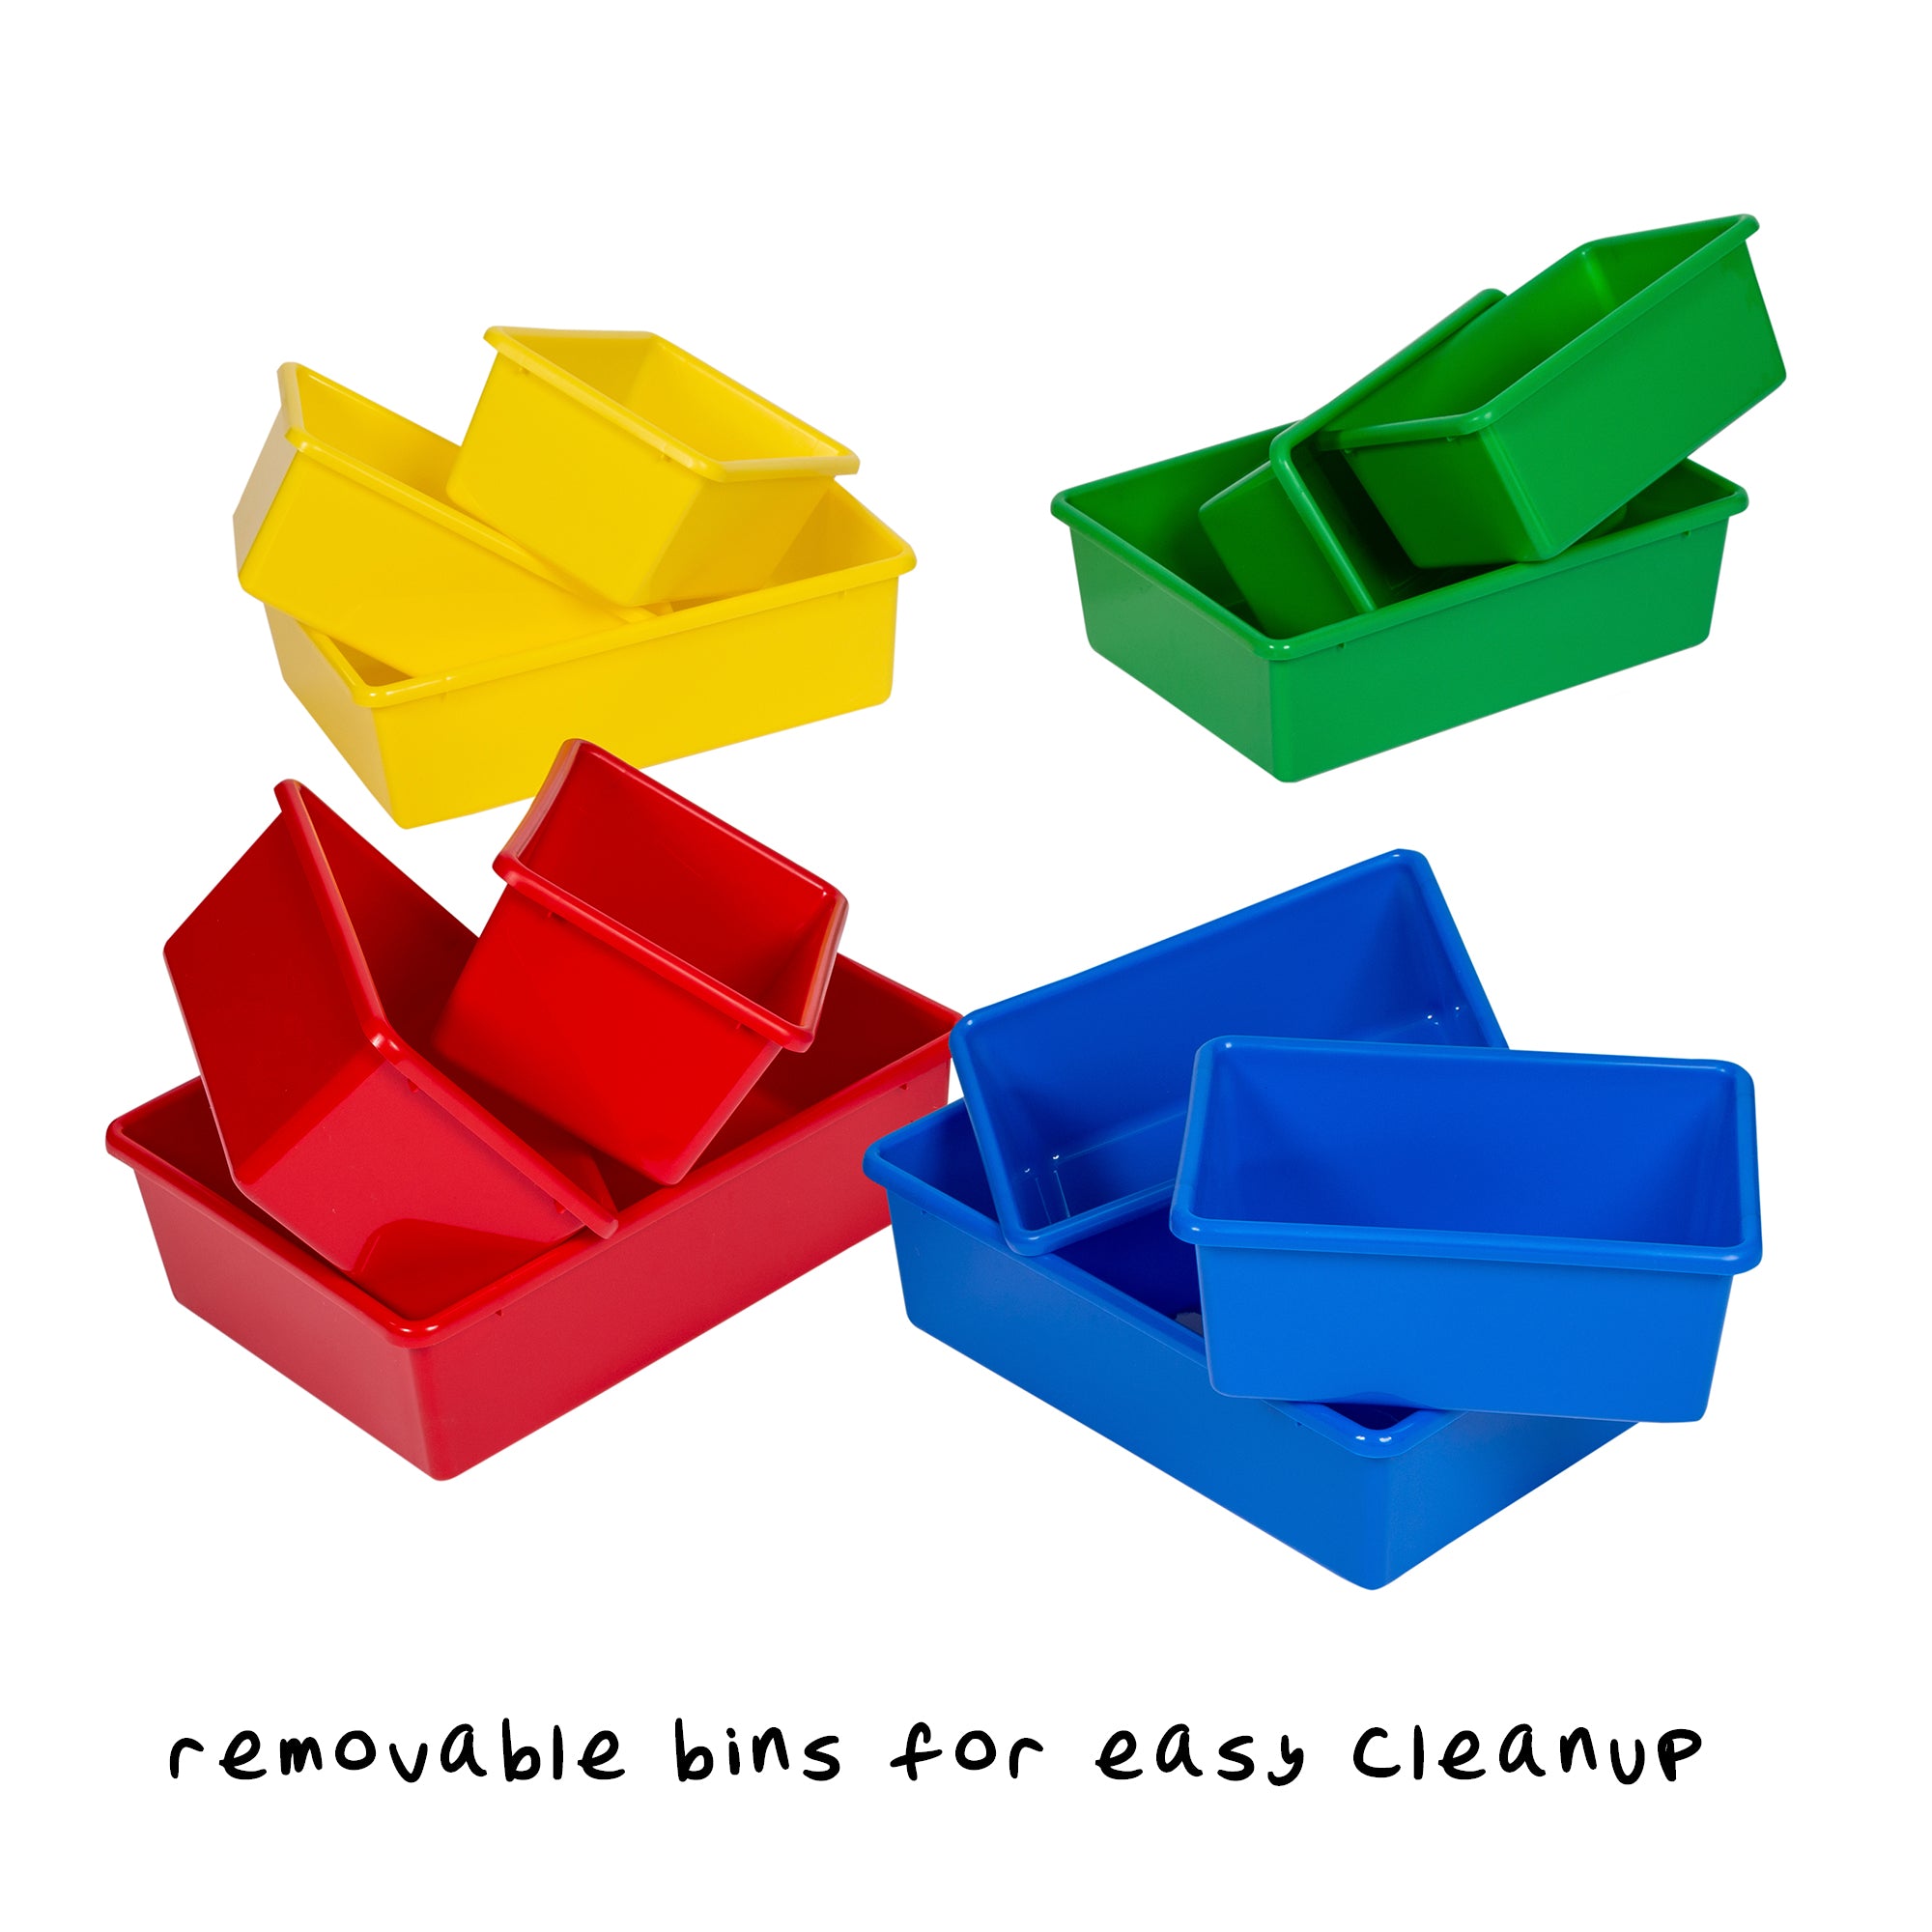 Basics Kids Toy Storage Organizer With 12 Plastic Bins, Natural Wood  With Bright Bins, 10.9 D x 33.6 W x 31.1 H